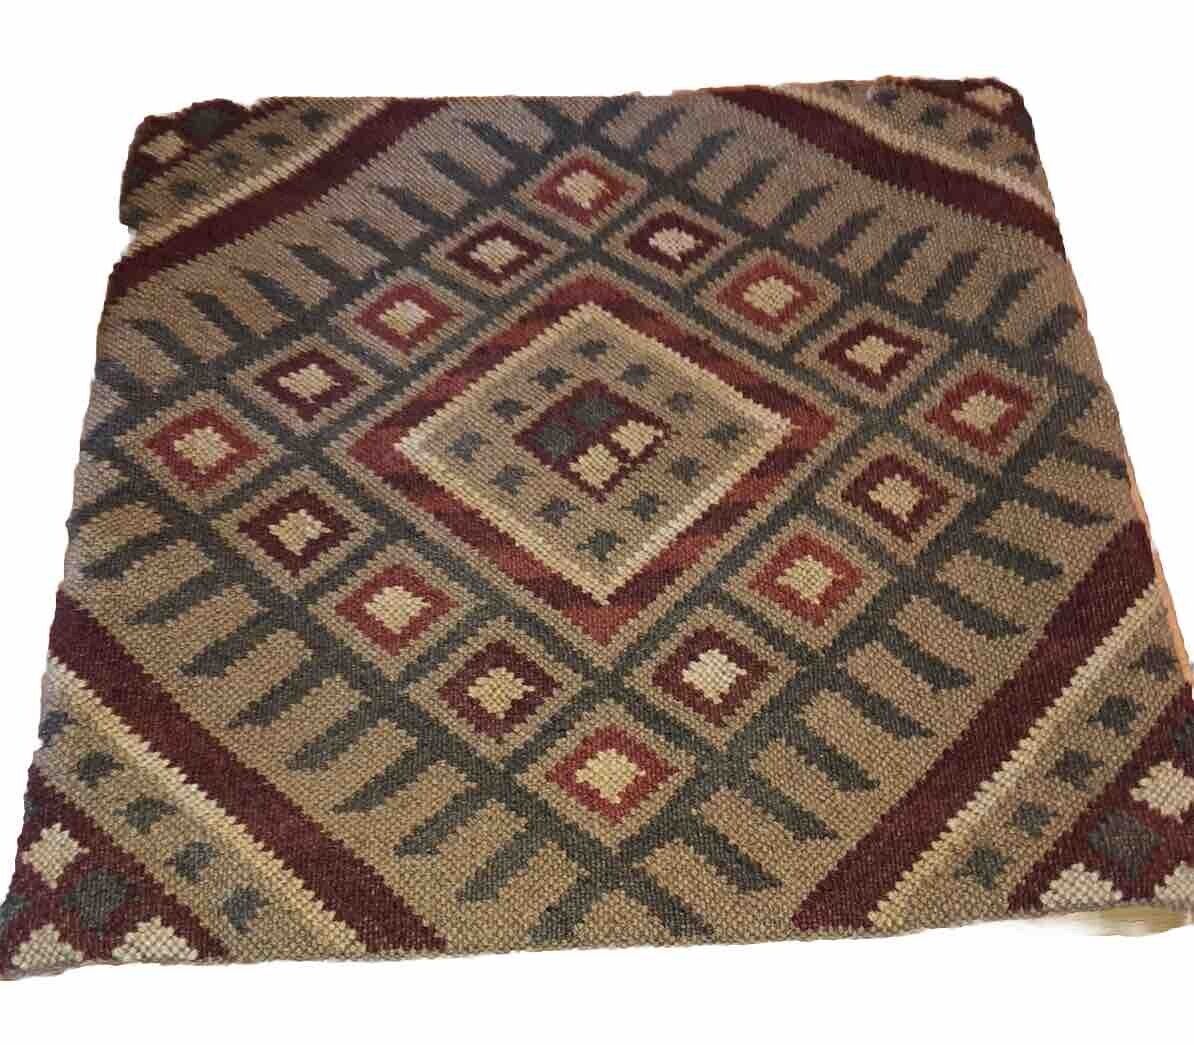 VTG Pottery Barn Kilim Wool/Cotton Multicolor 18” Square Pillow Cover #1